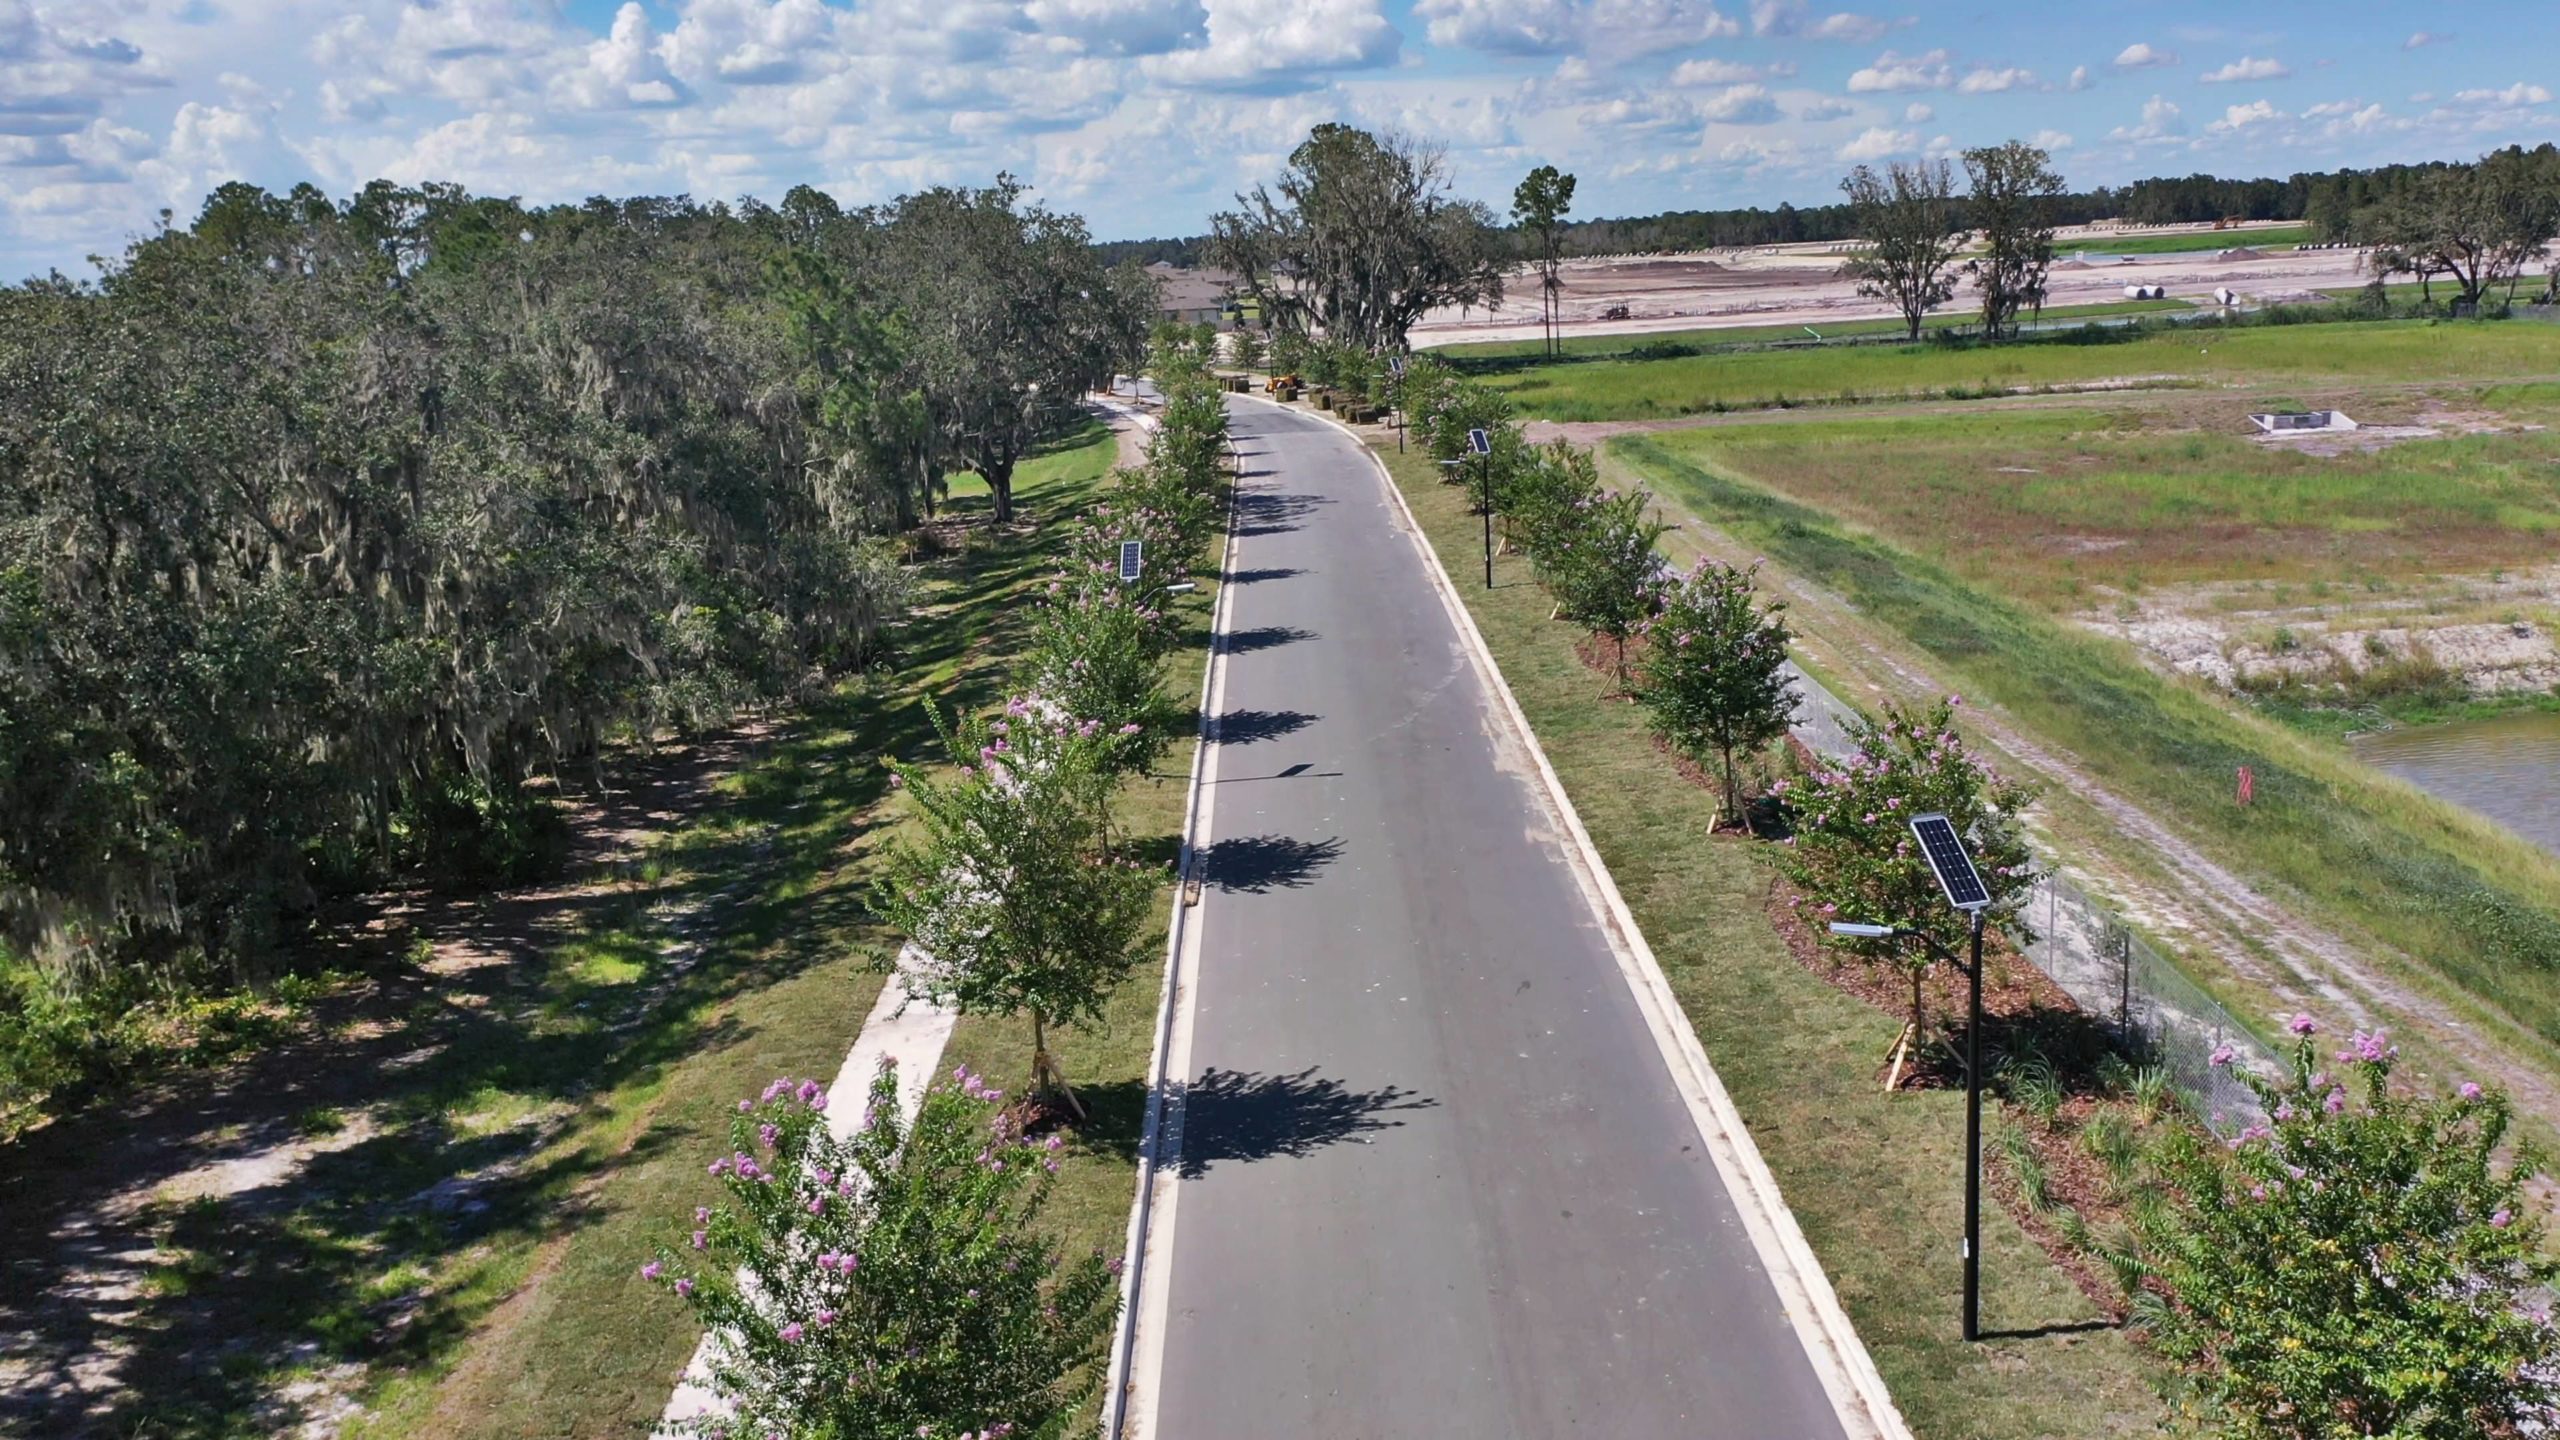 North Park Isle - Plant City Florida - Main Road Entrance